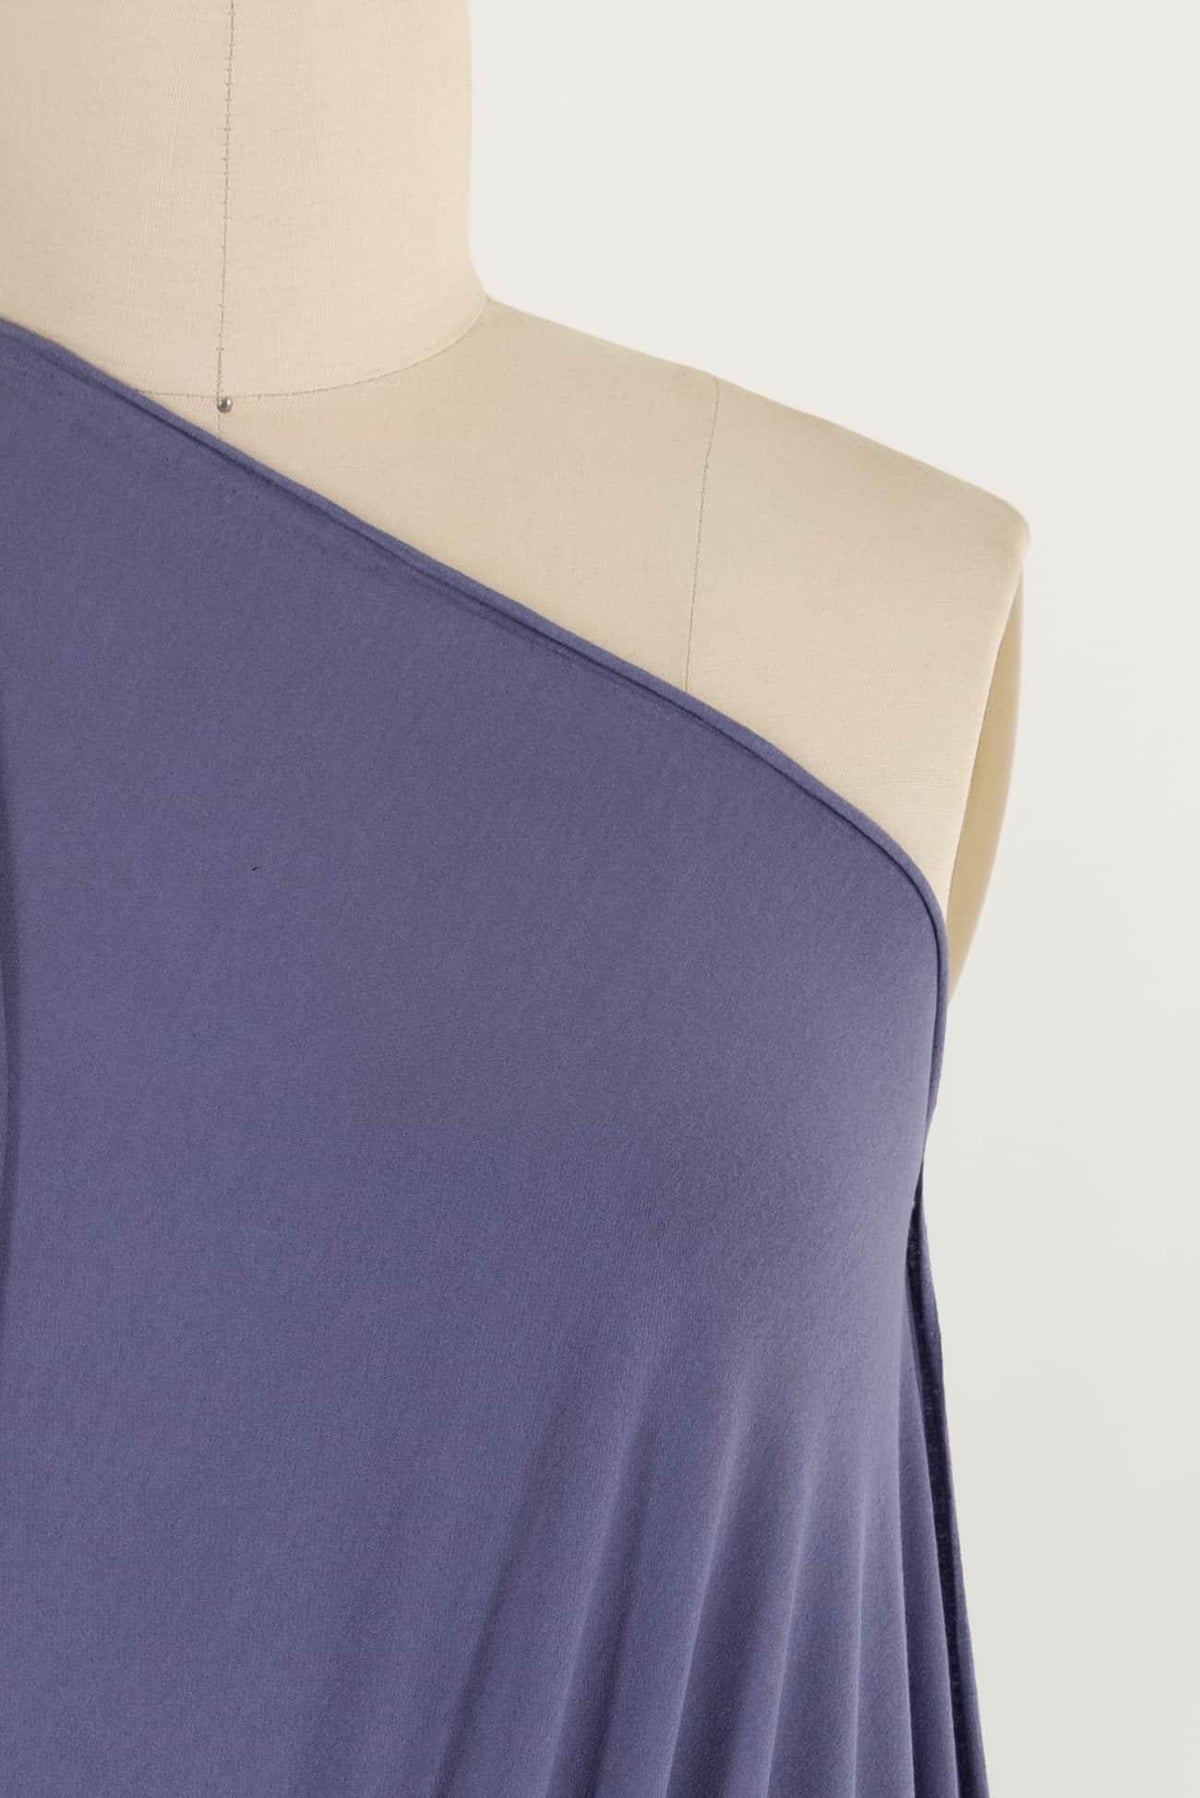 Hyacinth Lavender USA Knit - Marcy Tilton Fabrics